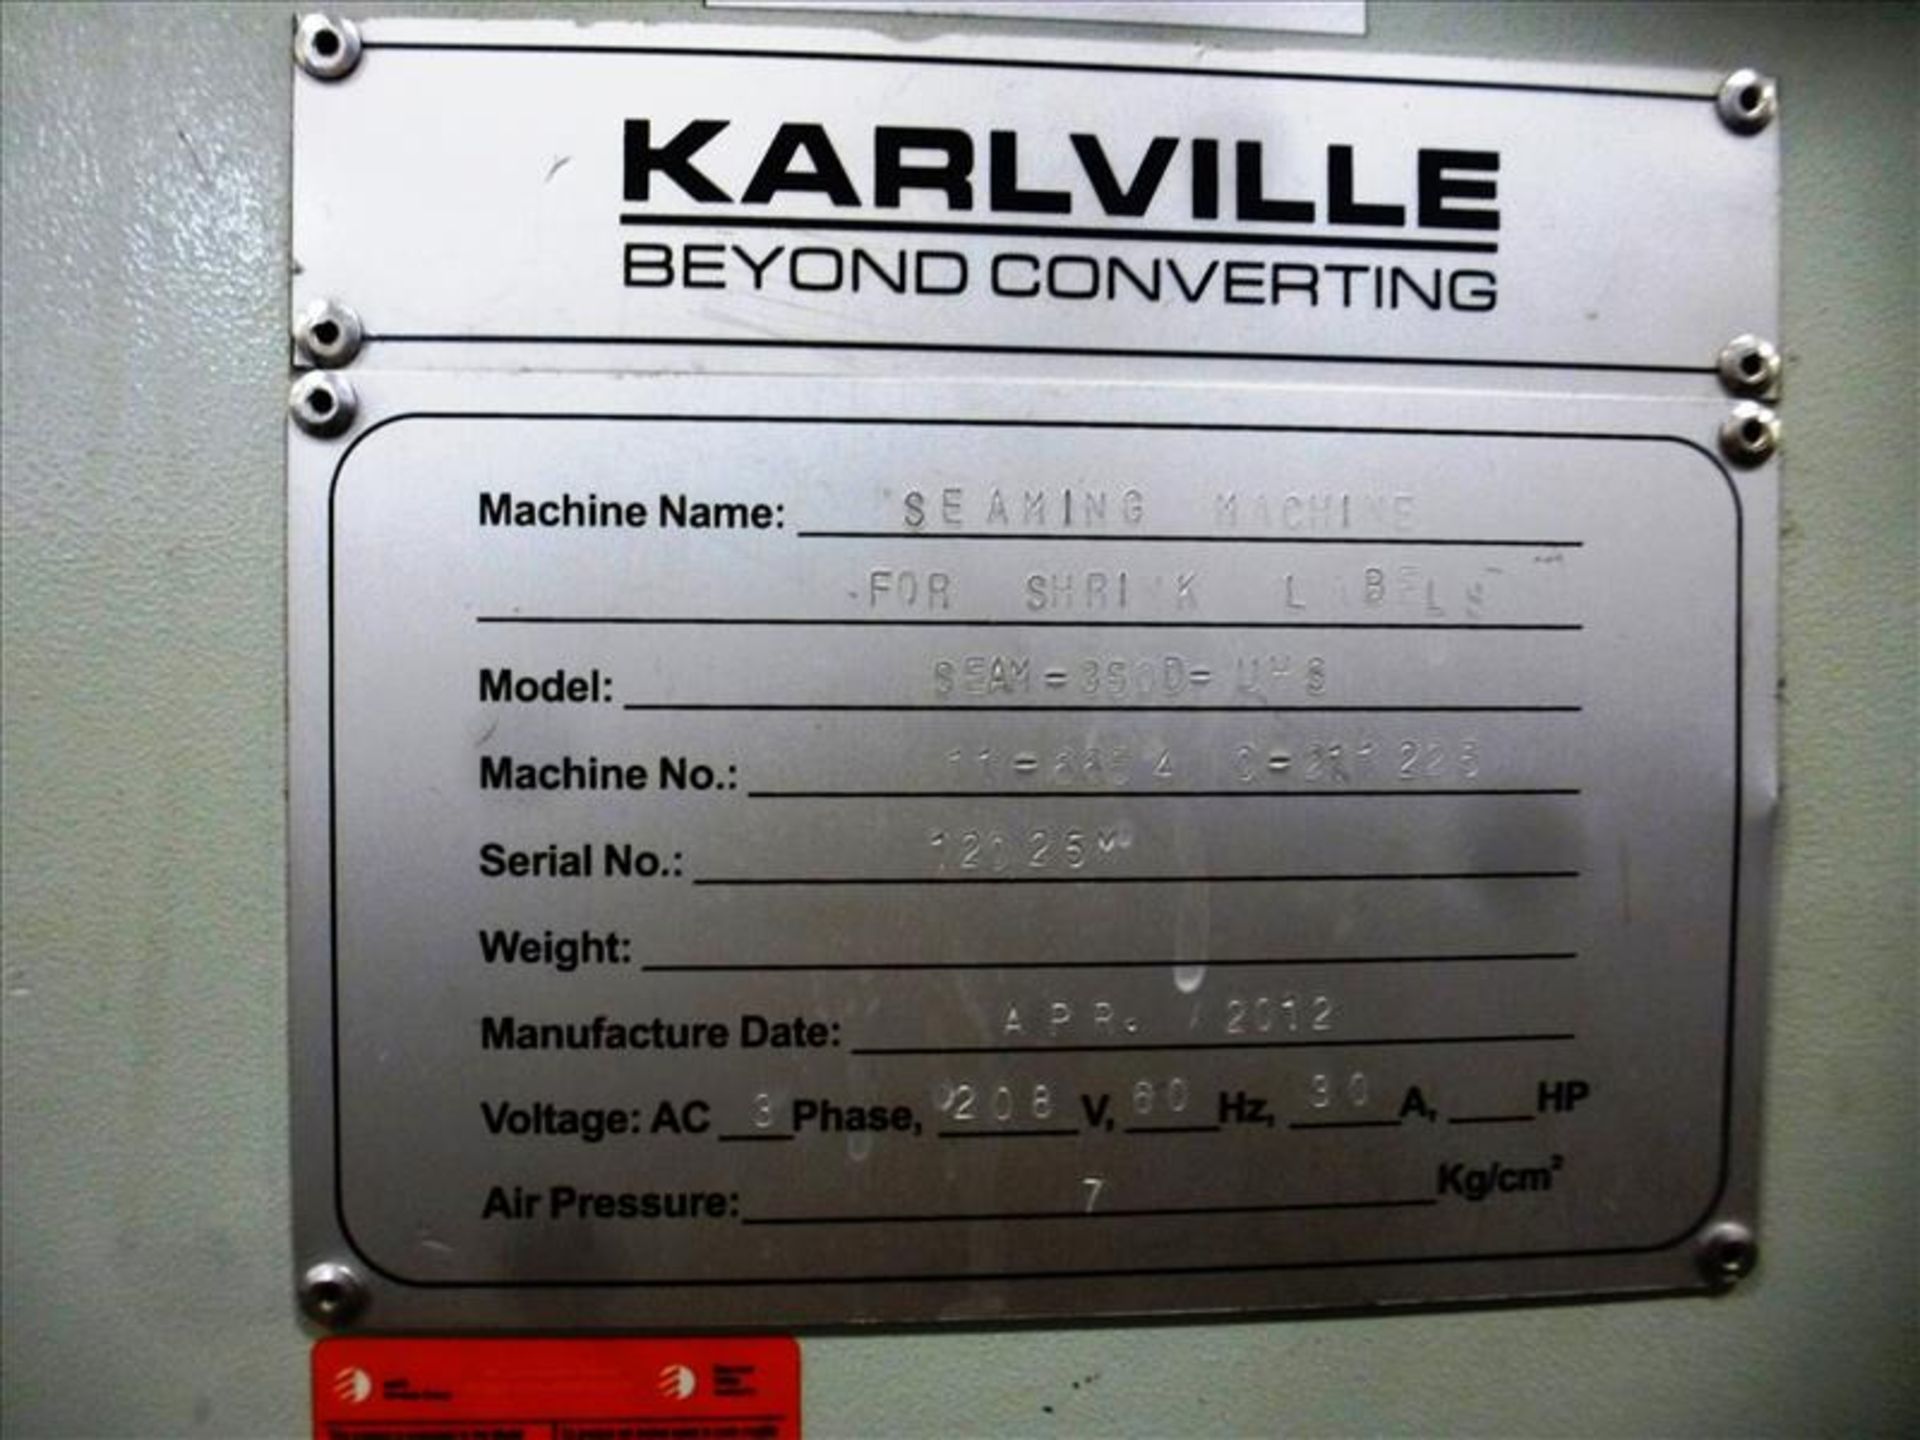 2012 Karlville K4 shrink label seaming machine, model SEAM-350D-UHS, machine no. 11-6654 C-211225, - Image 6 of 7